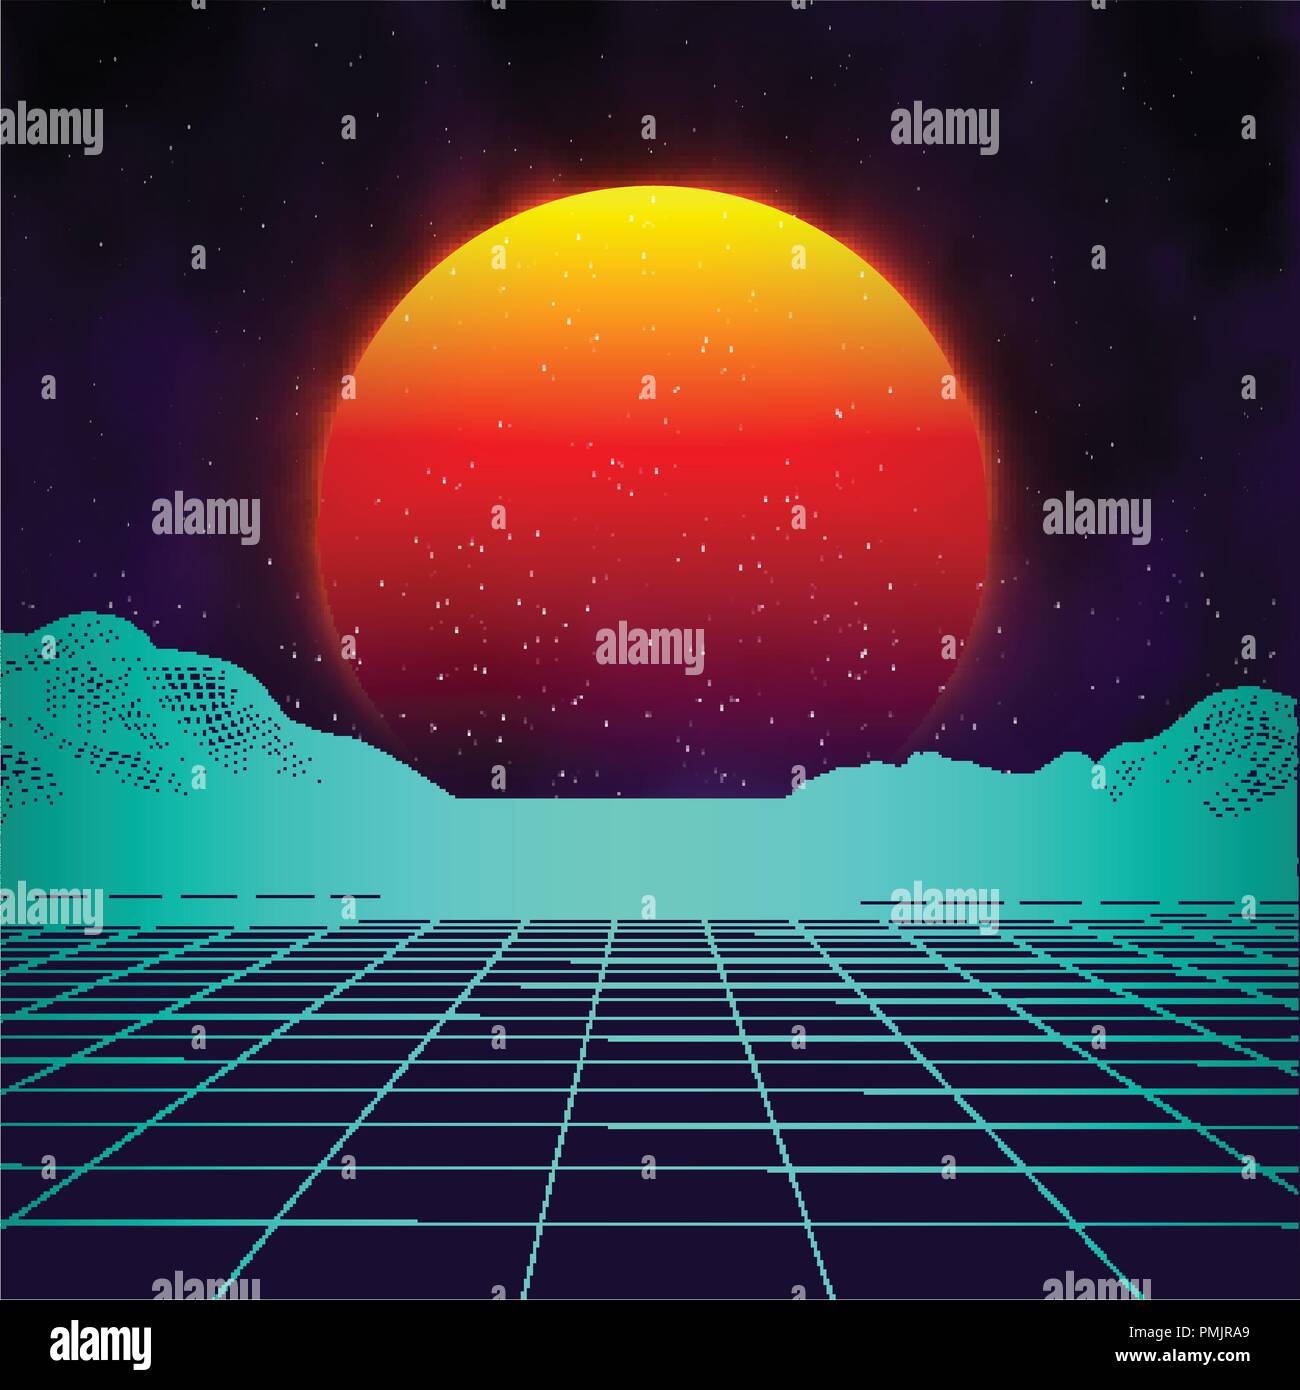 Retro 80s Disco album cover design Template